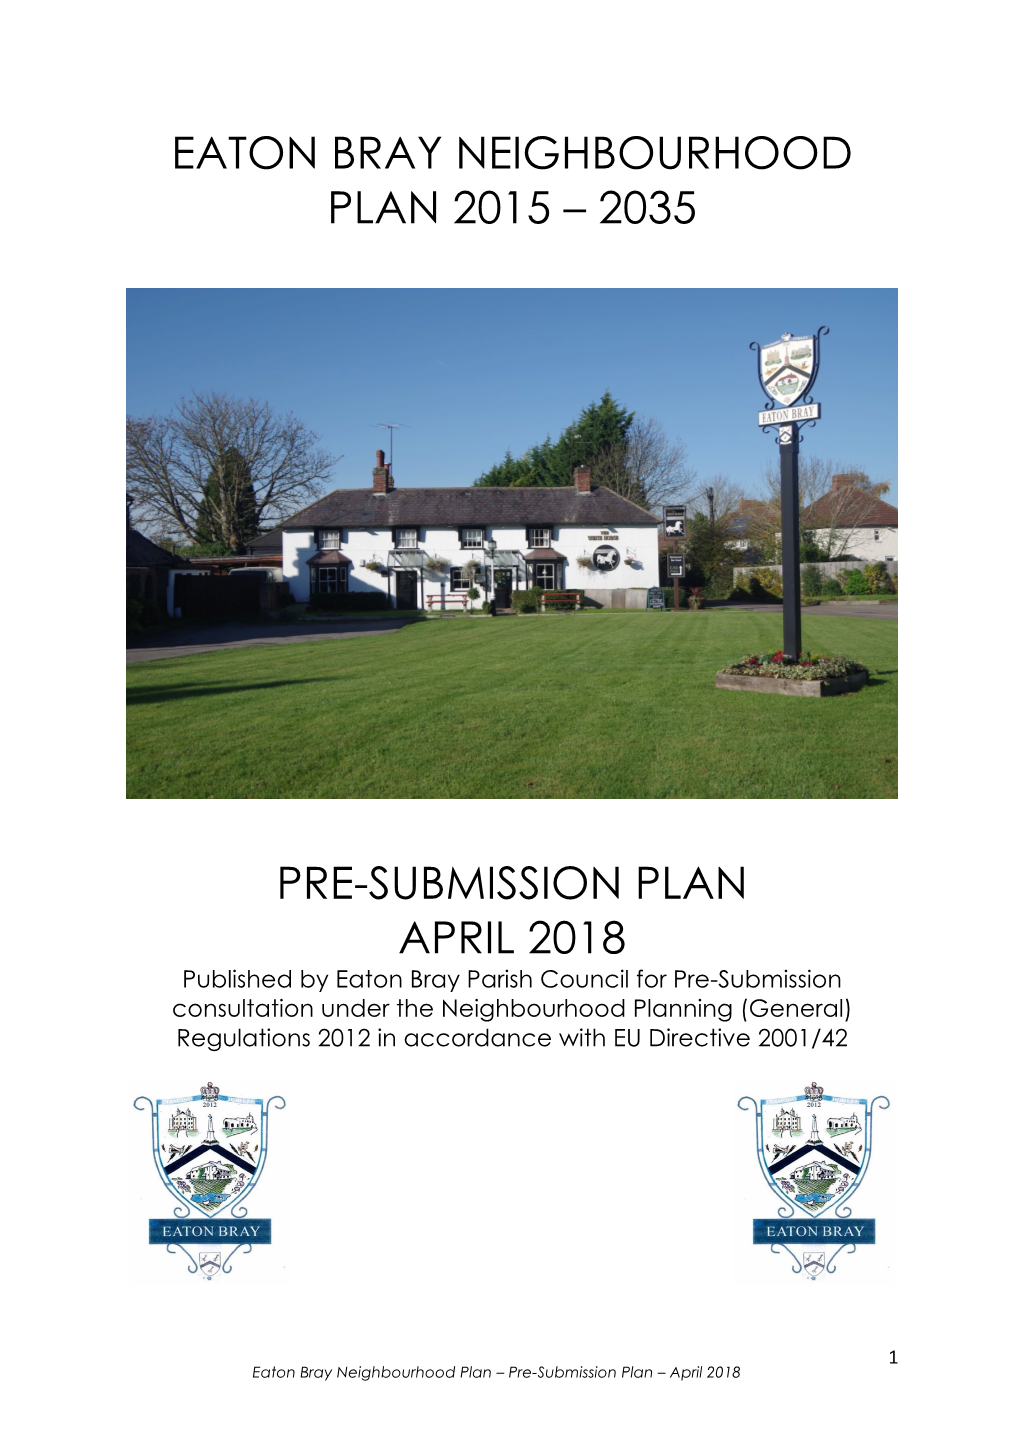 Eaton Bray Neighbourhood Plan 2015 – 2035 Pre-Submission Plan April 2018